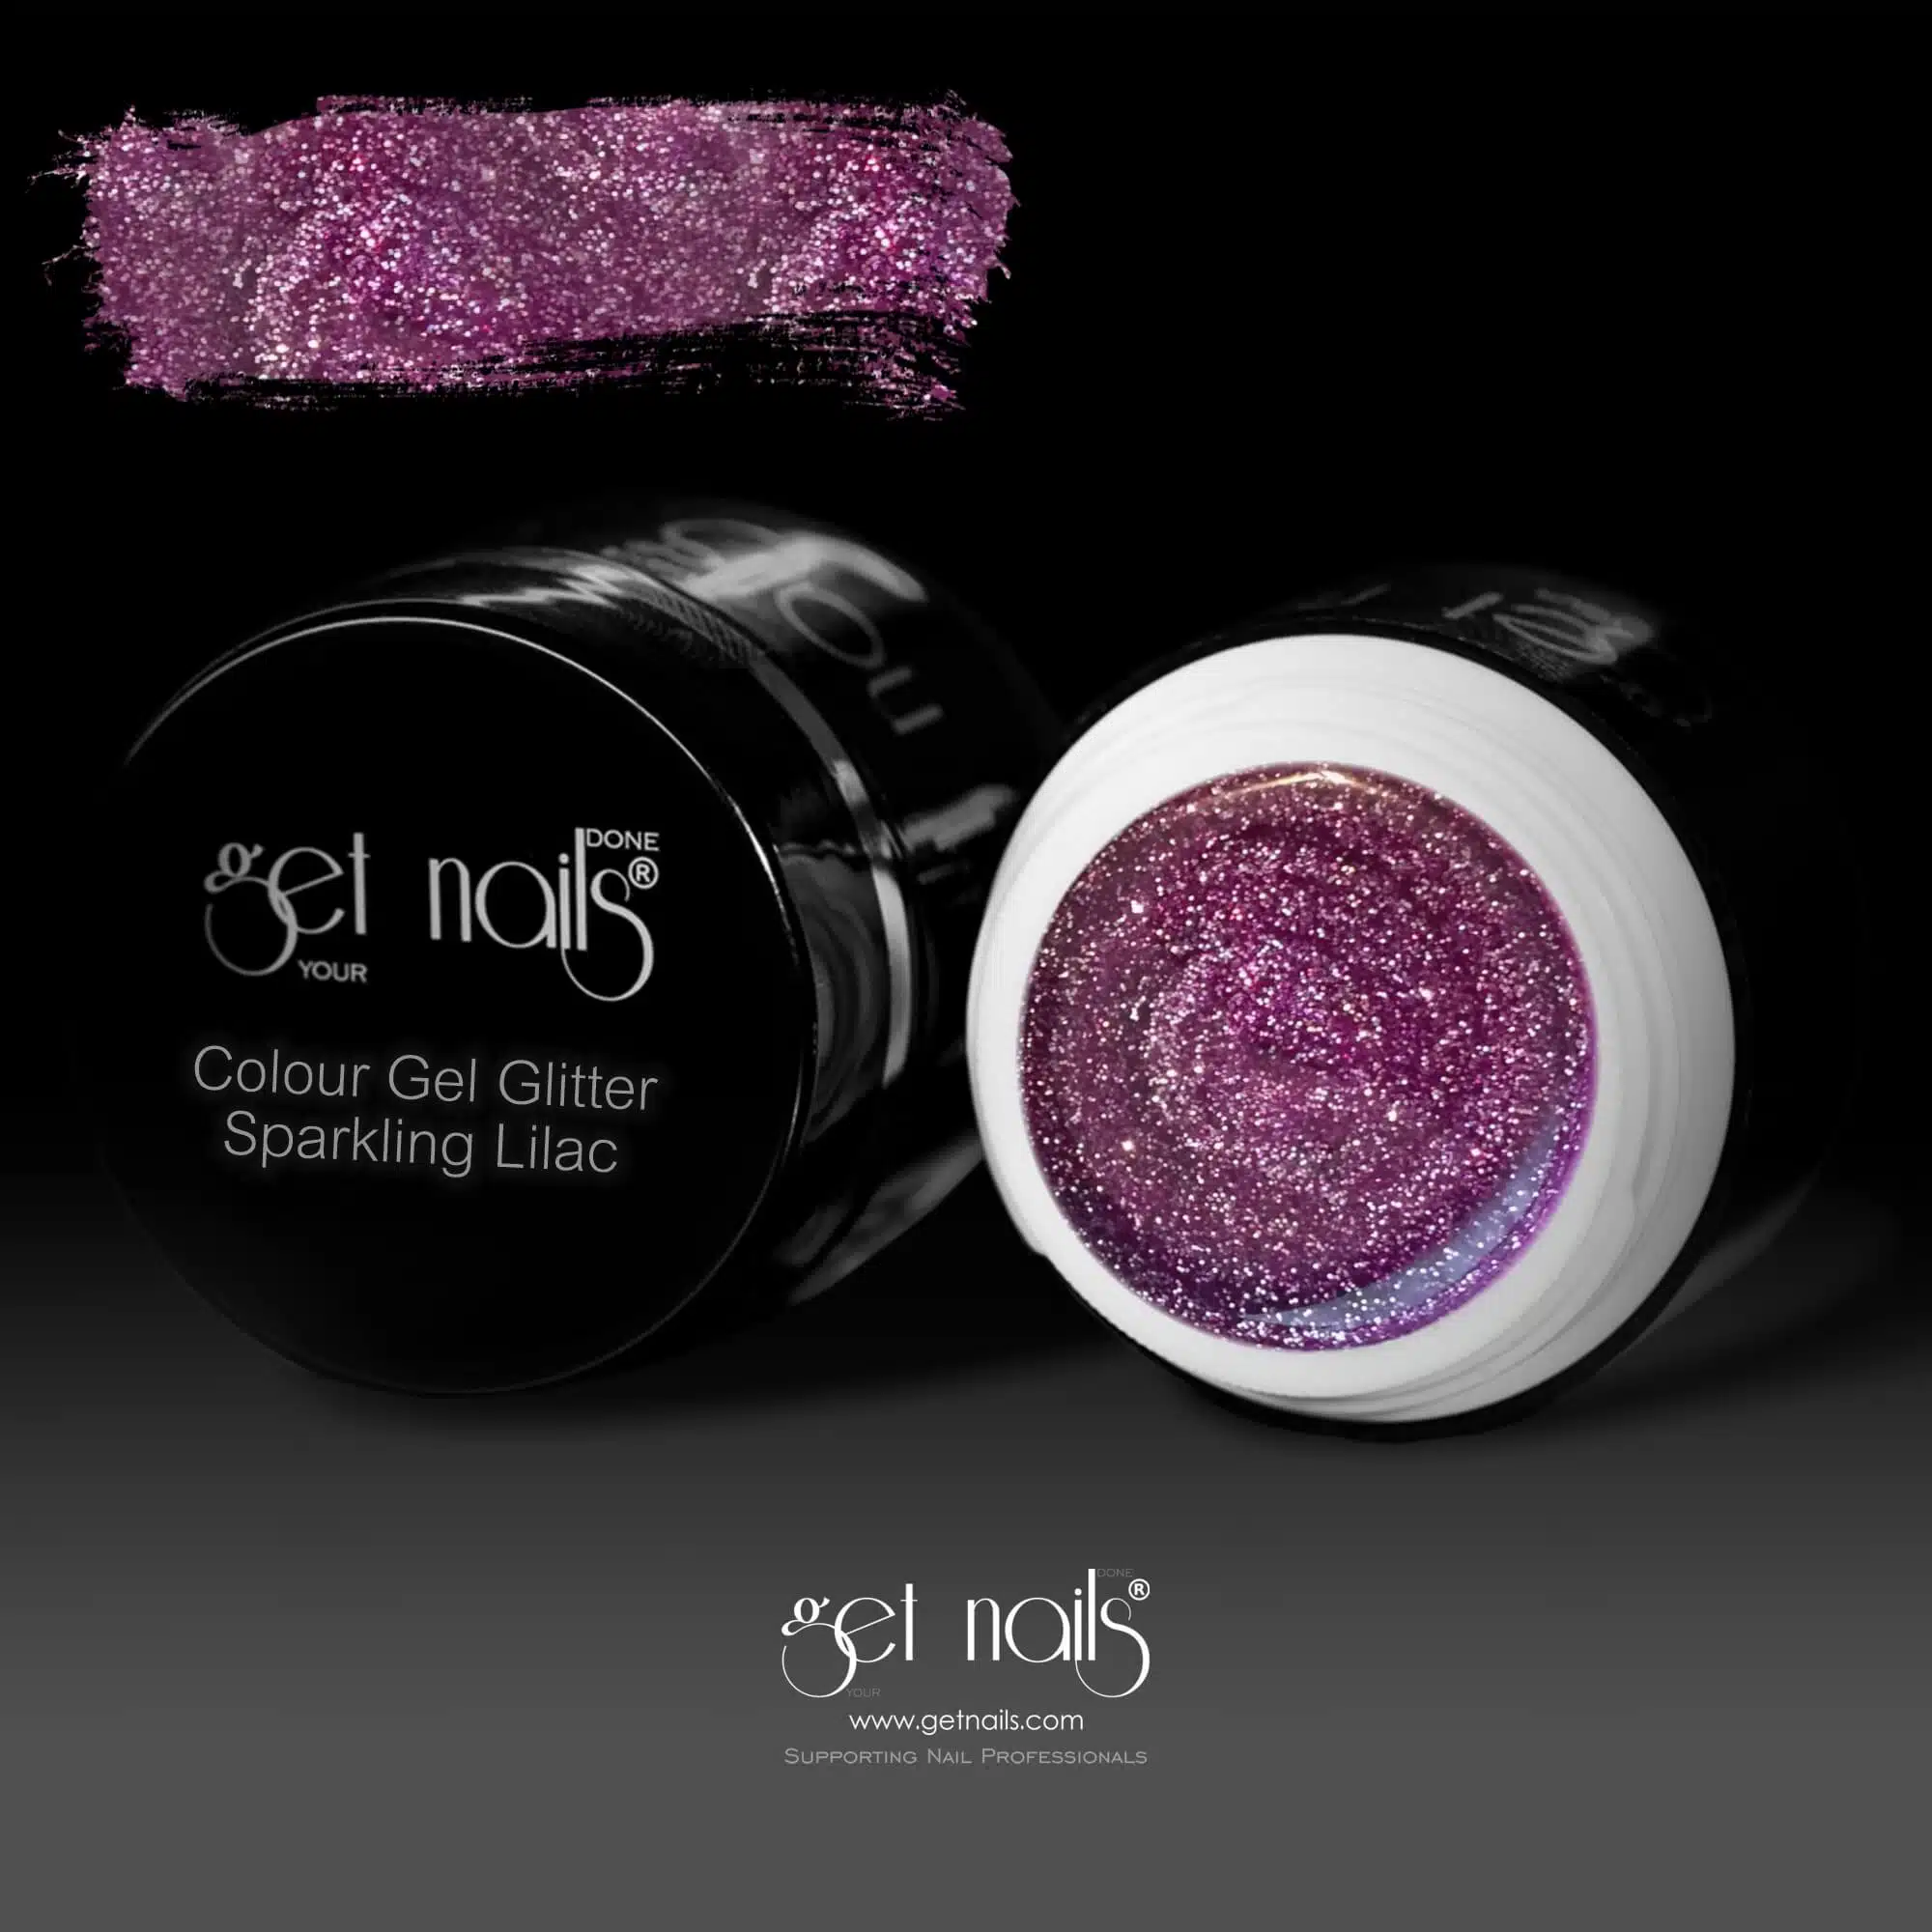 Get Nails Austria - Gel colorato Glitter Sparkling Lilac 5g